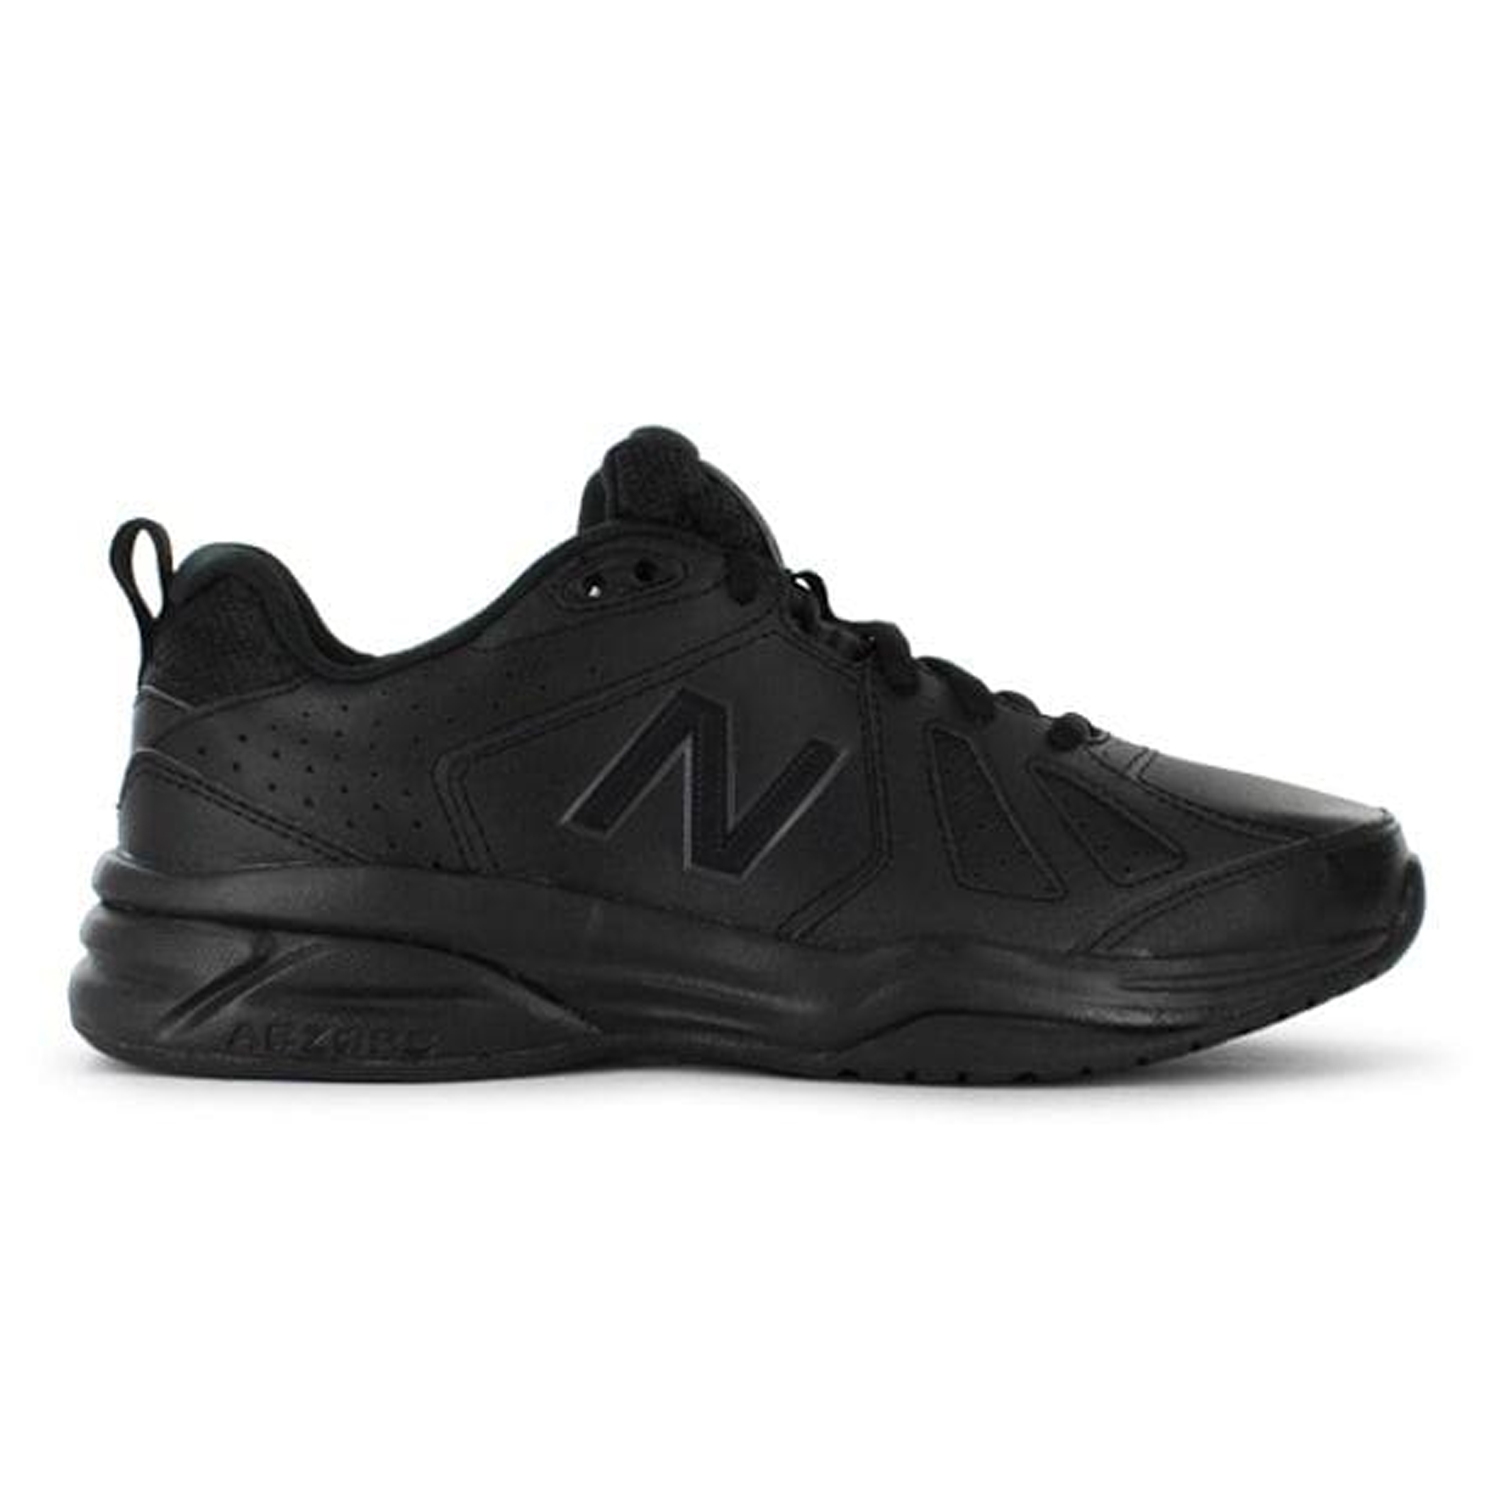 New Balance W624 v5 (D) Wide Womens Cross Training Shoes: Black | Mike ...